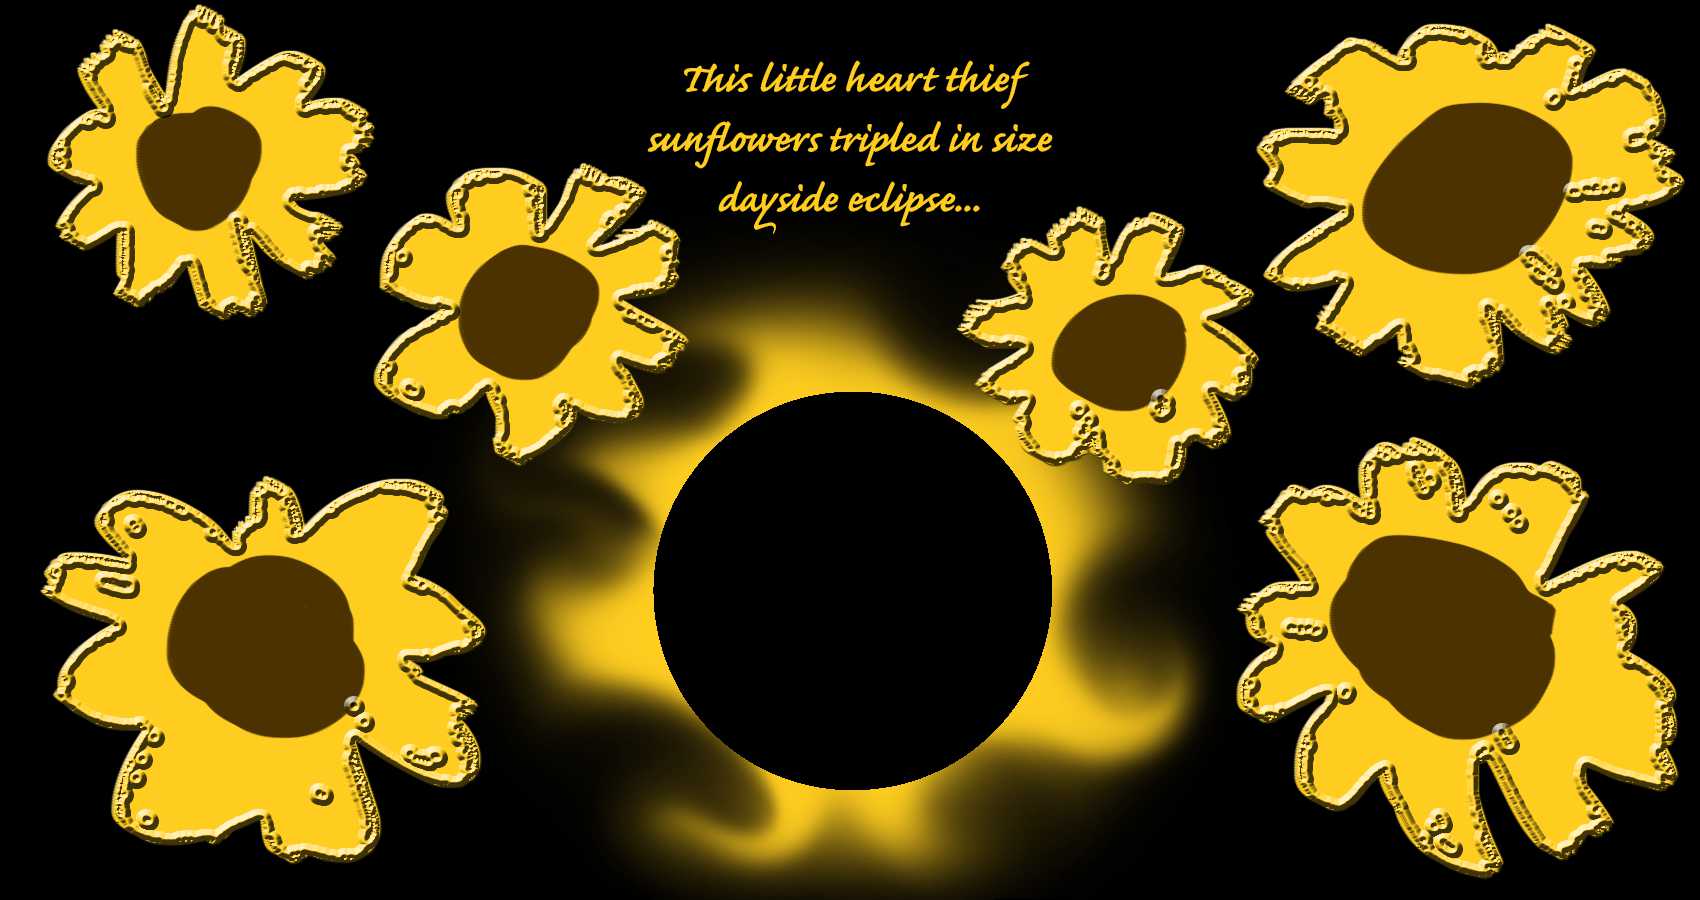 Dayside Eclipse, a haiku by Robyn MacKinnon at Spillwords.com